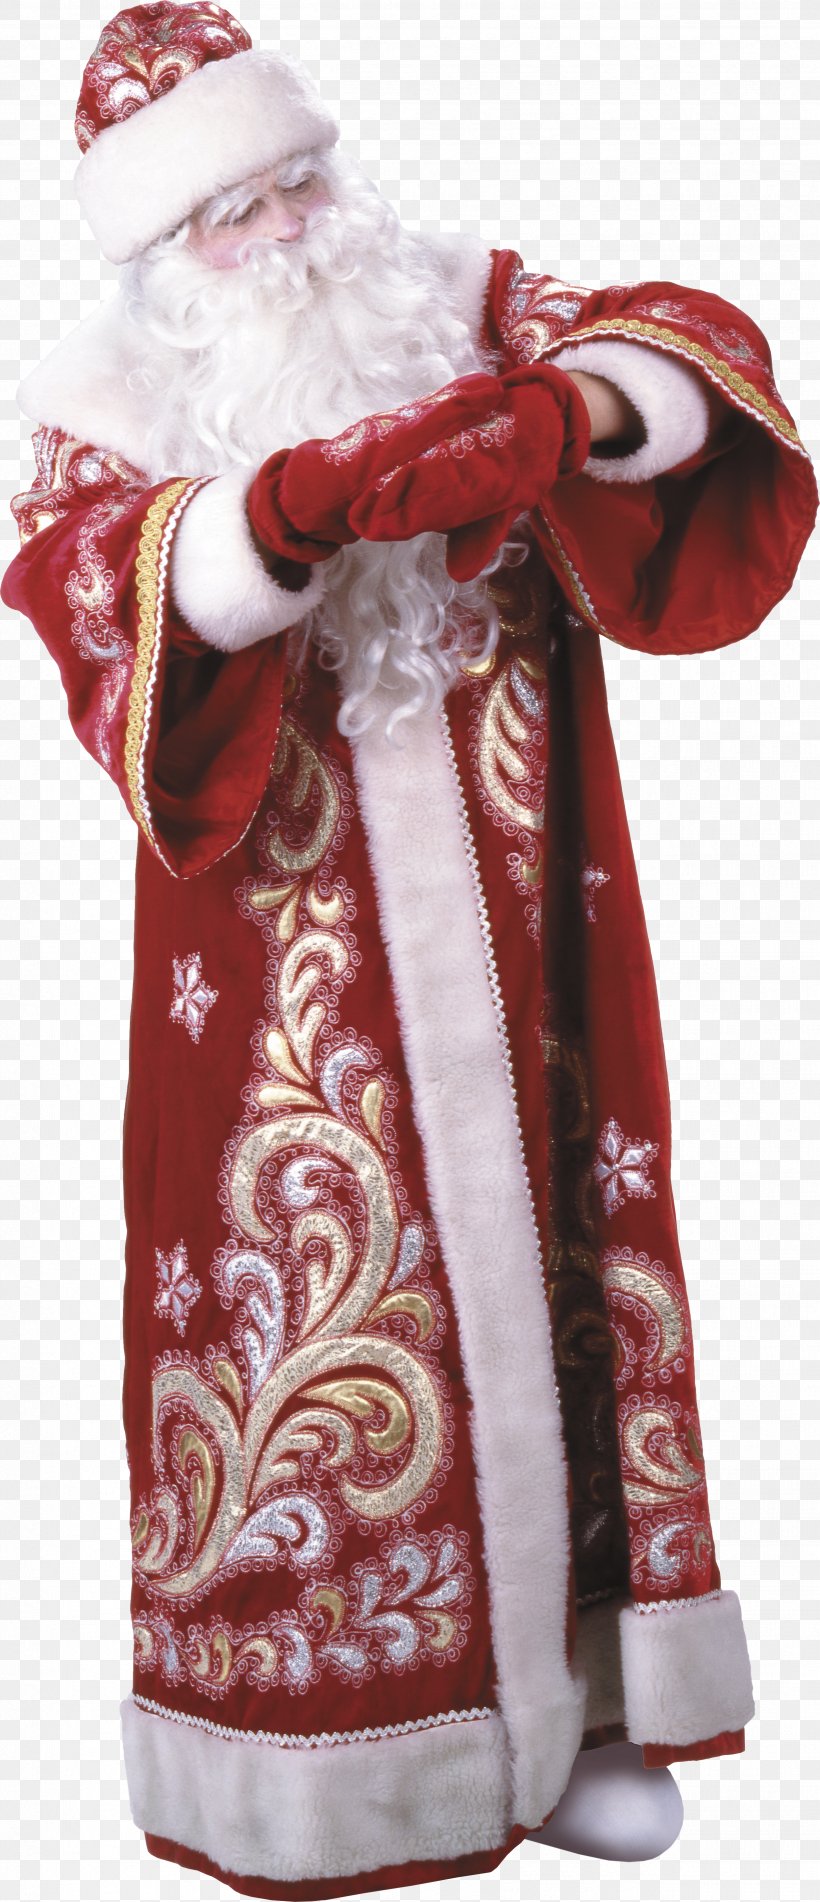 Santa Claus Snegurochka Ded Moroz Christmas Ornament Christmas Decoration, PNG, 2493x5784px, Santa Claus, Character, Christmas, Christmas Decoration, Christmas Ornament Download Free